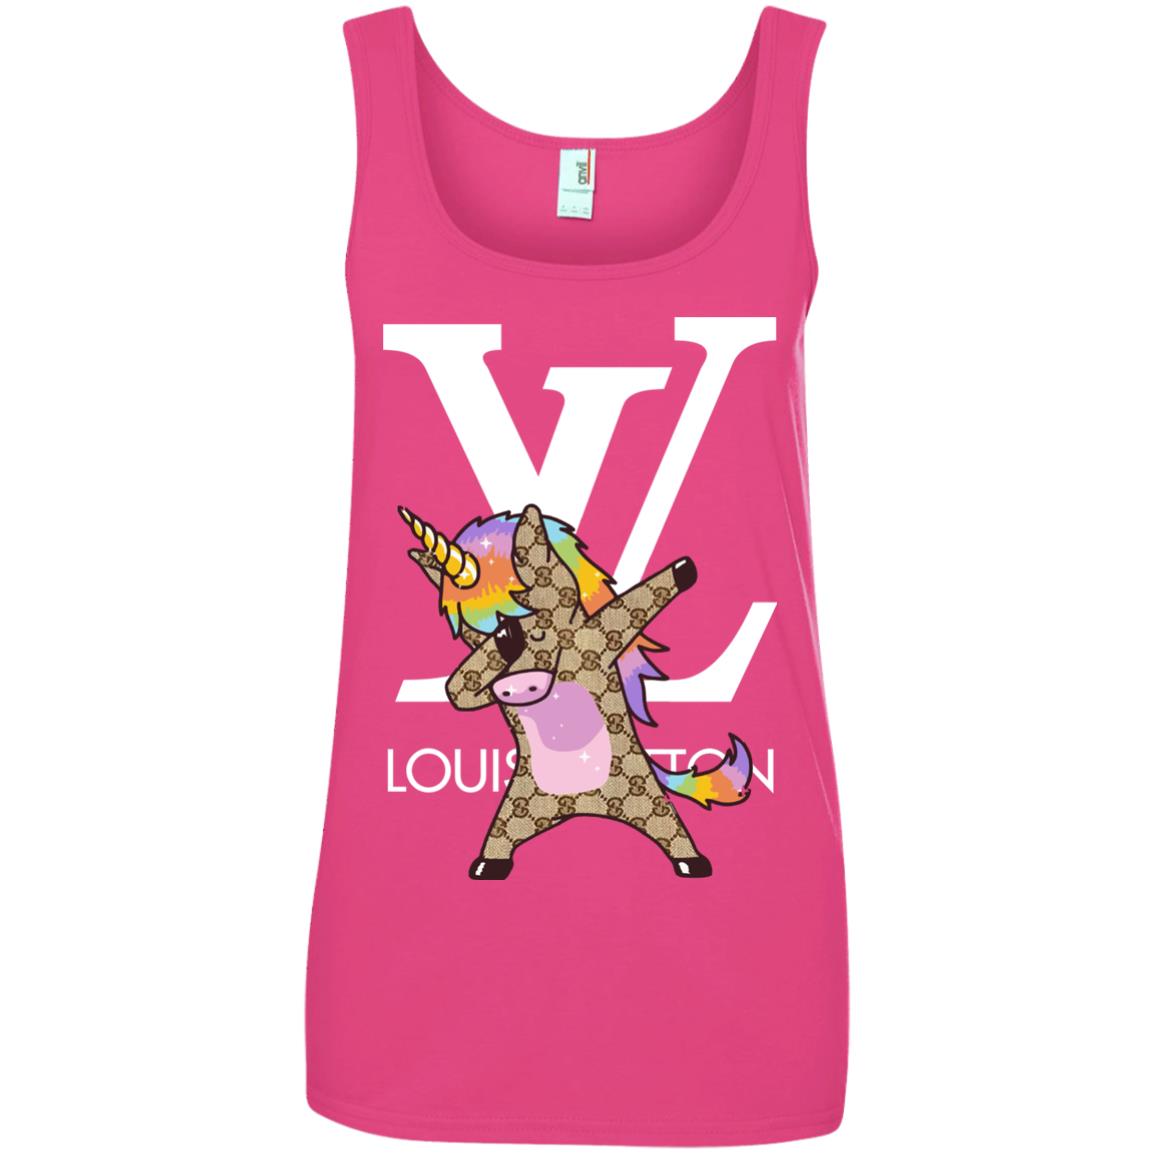 Unicorn Louis Vuitton Shirt, sweatshirt, Hoodie - Rockatee